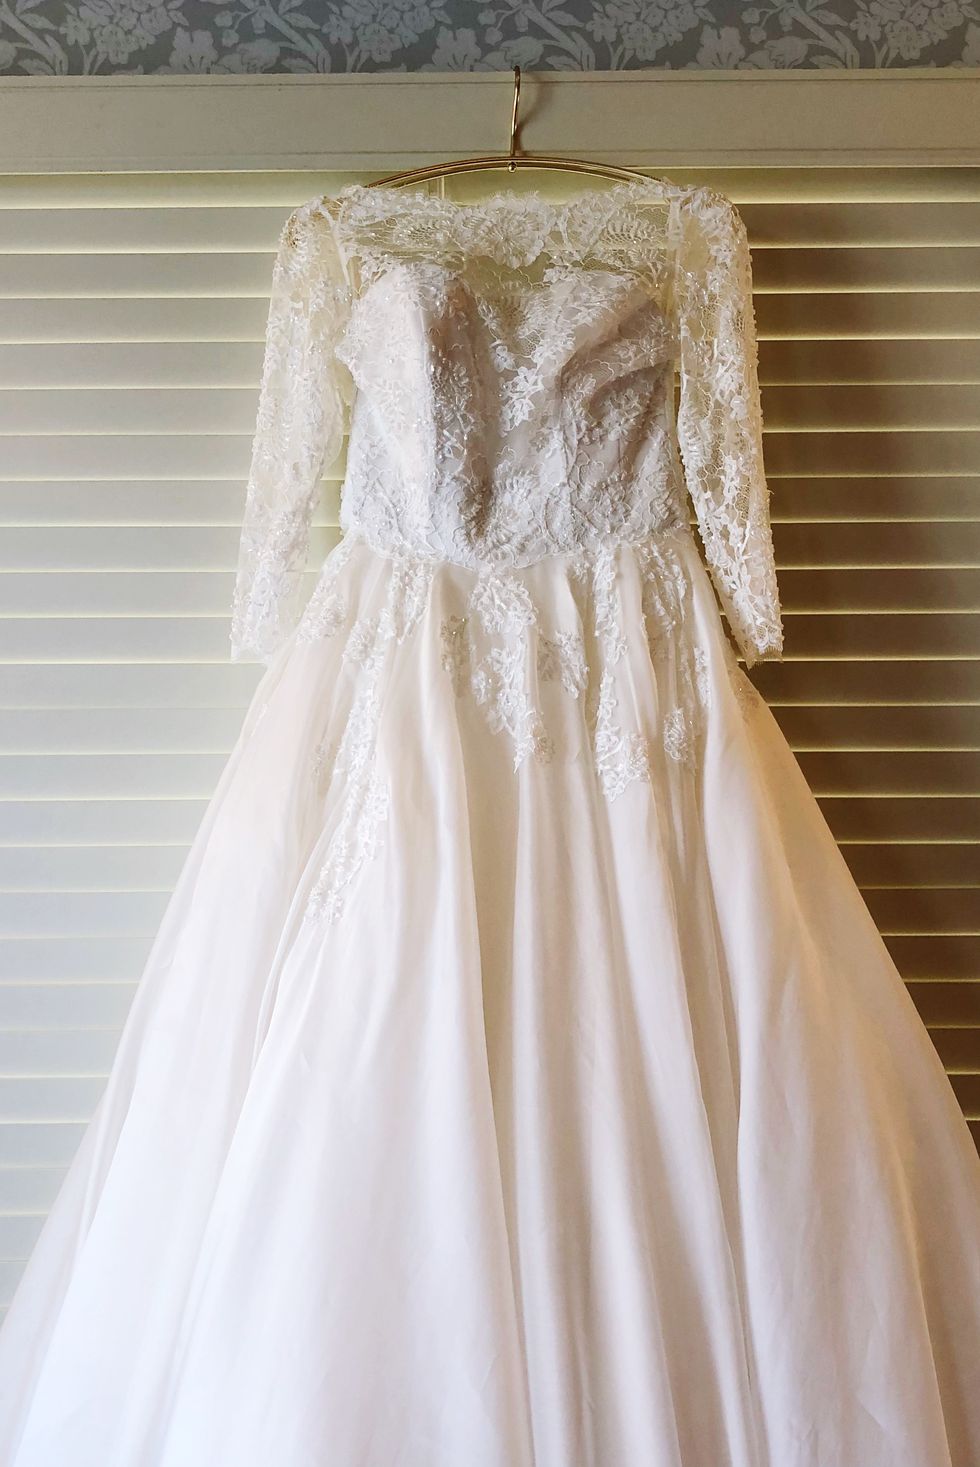 Close-Up Of Wedding Dress On Wall